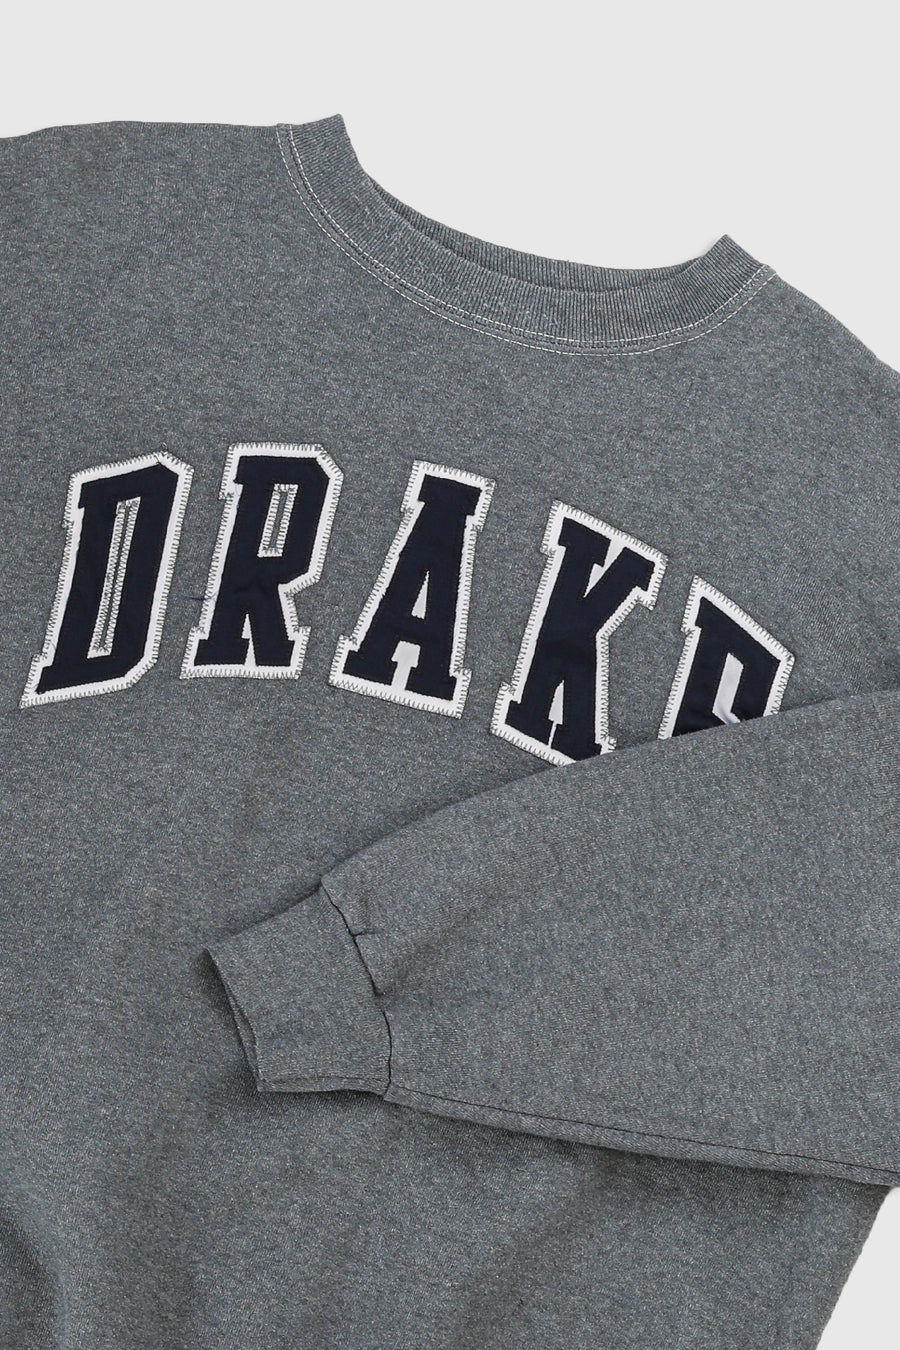 Vintage Drake Sweatshirt